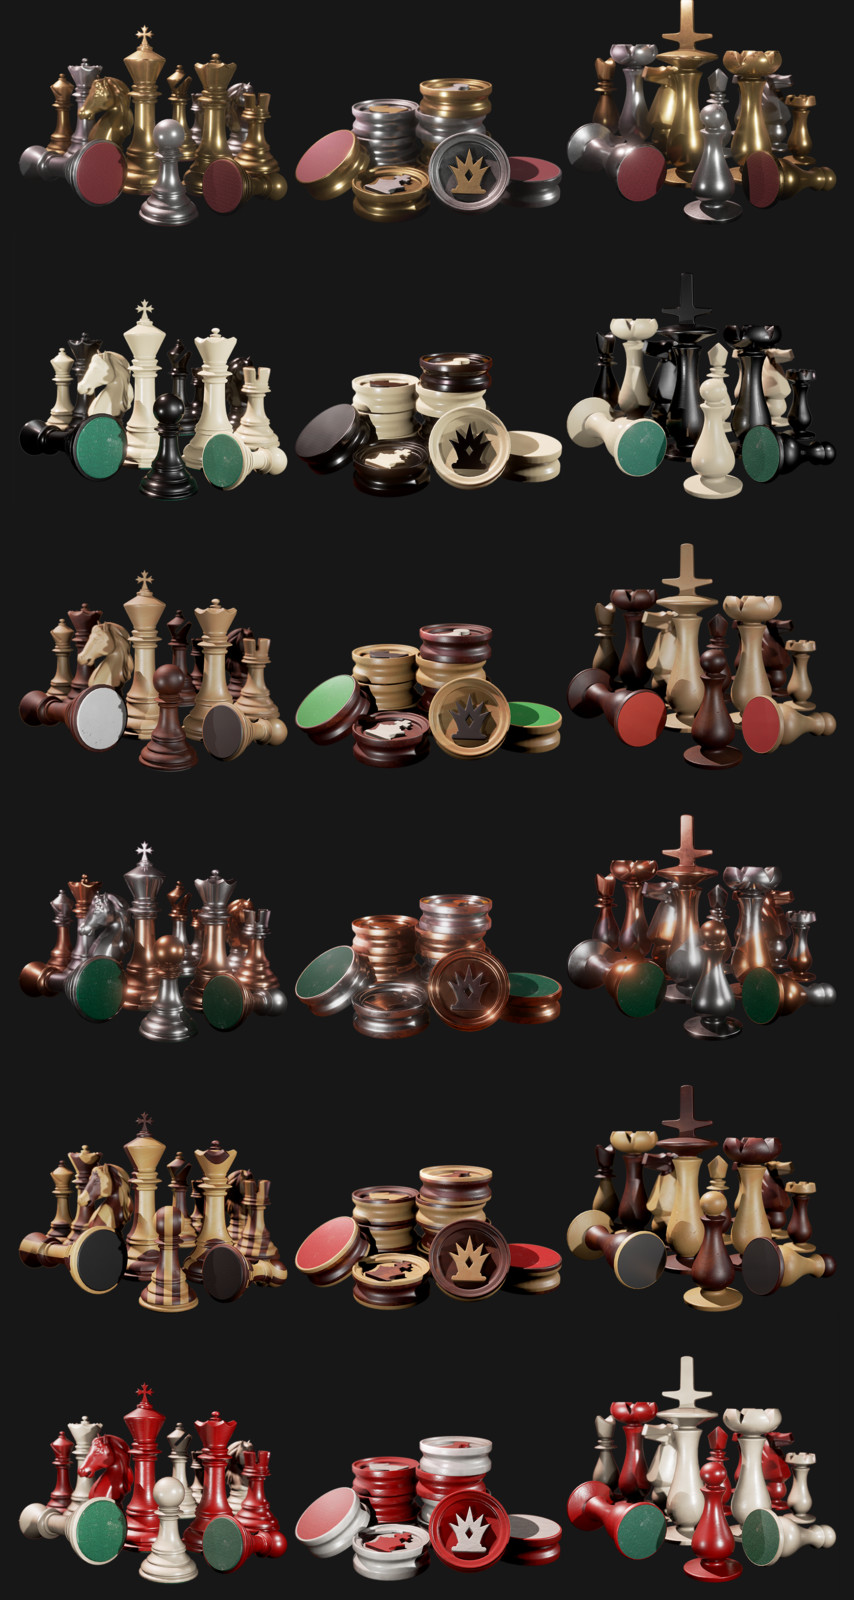 Remastered Original Chess Sets
"Staunton" - "Checkers" - "Williams"

High-poly re-work - Texturing - Shader Creation - Optimization